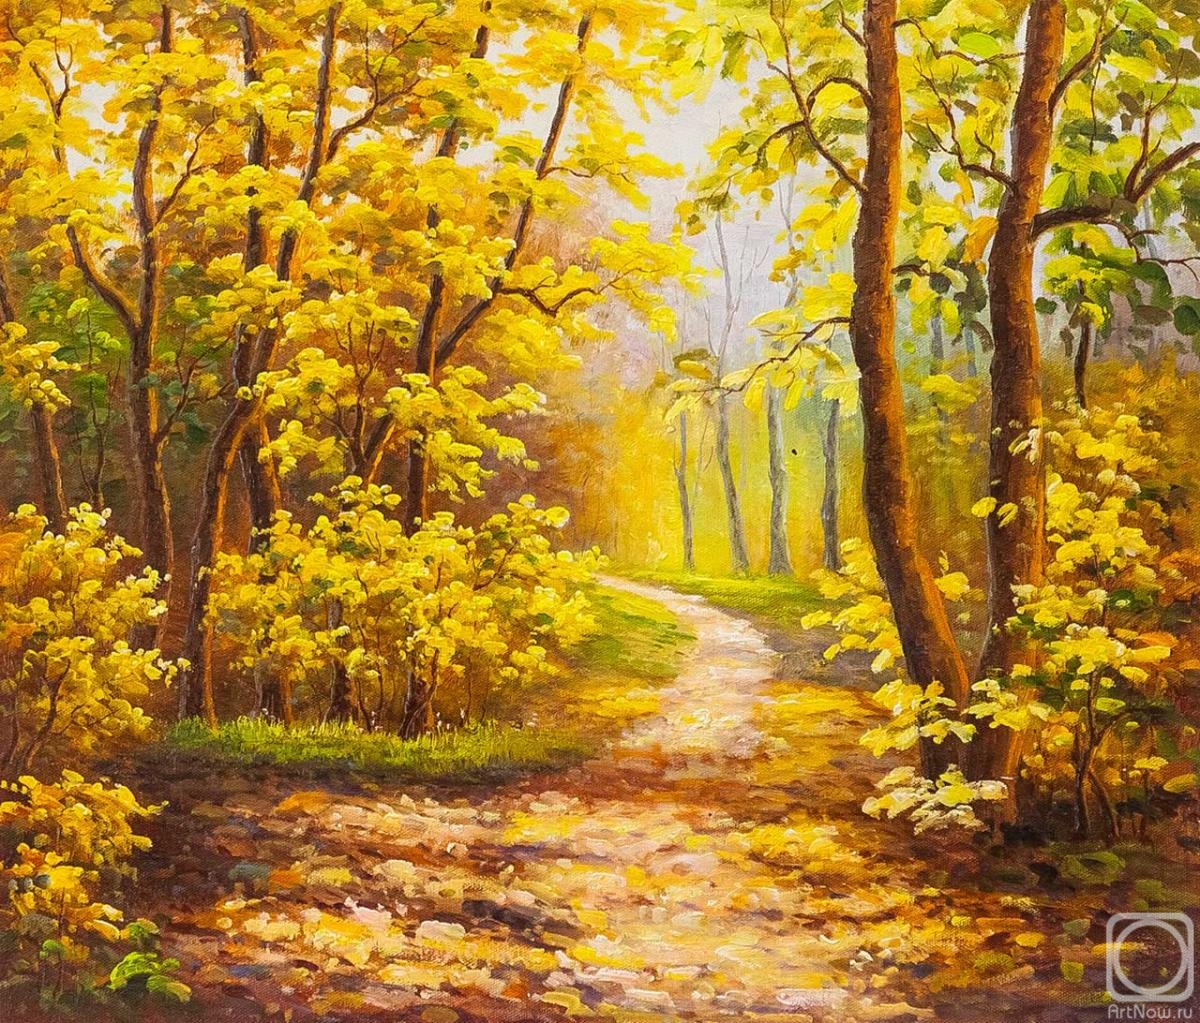 Sharabarin Andrey. Autumn golden walks along the paths